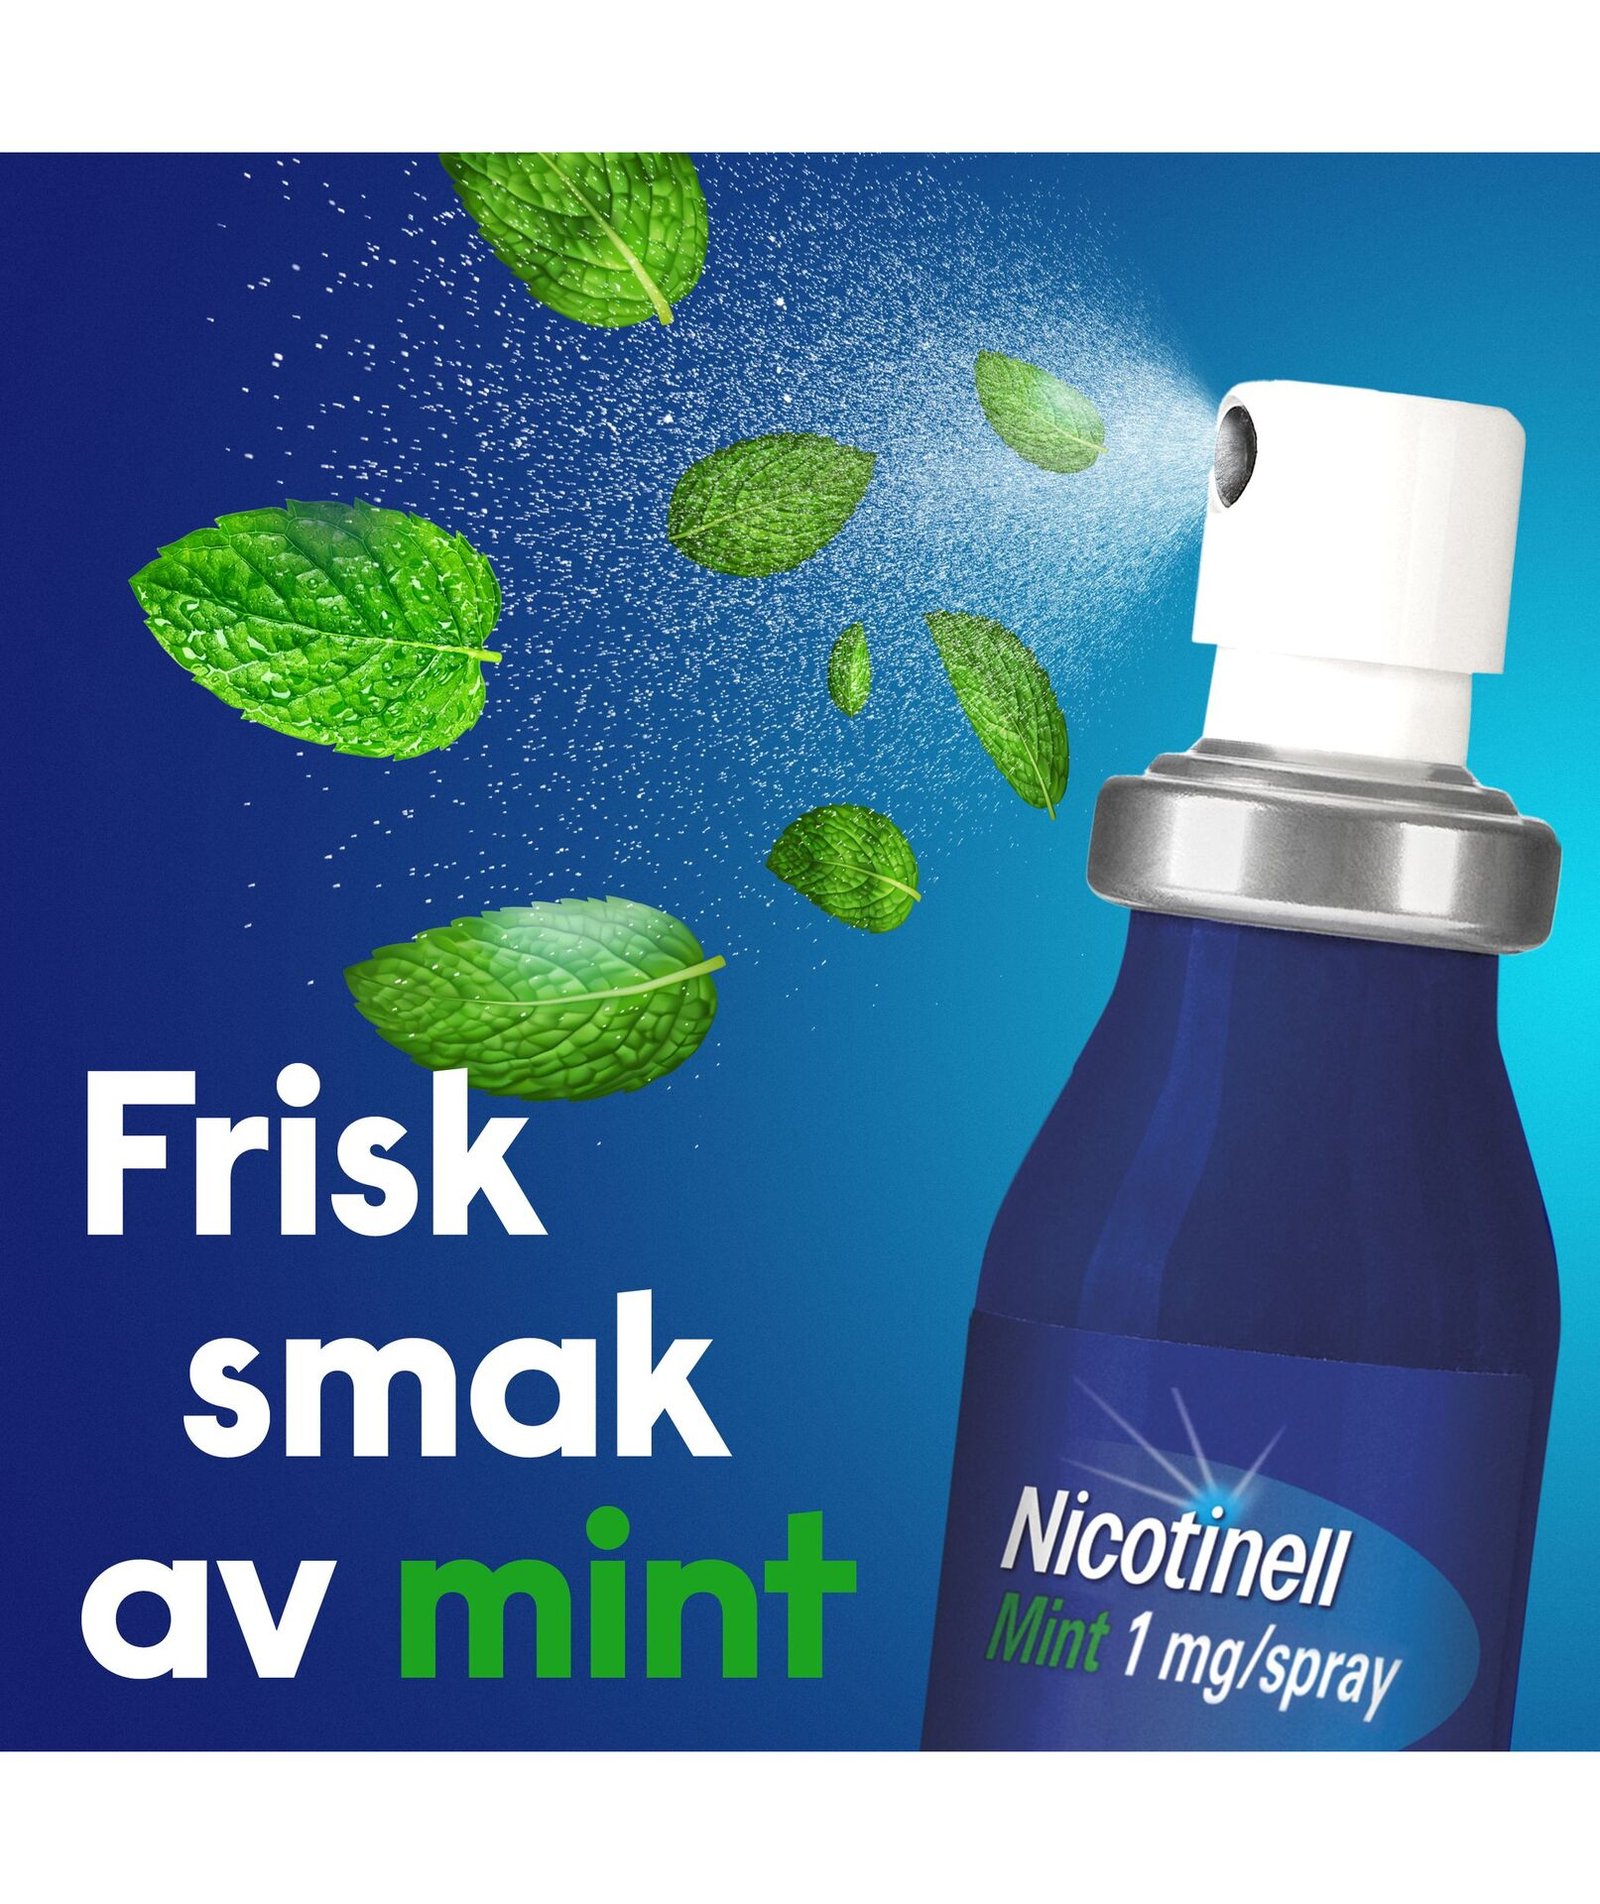 Nicotinell Mint Munspray 1mg Spray 150 doser